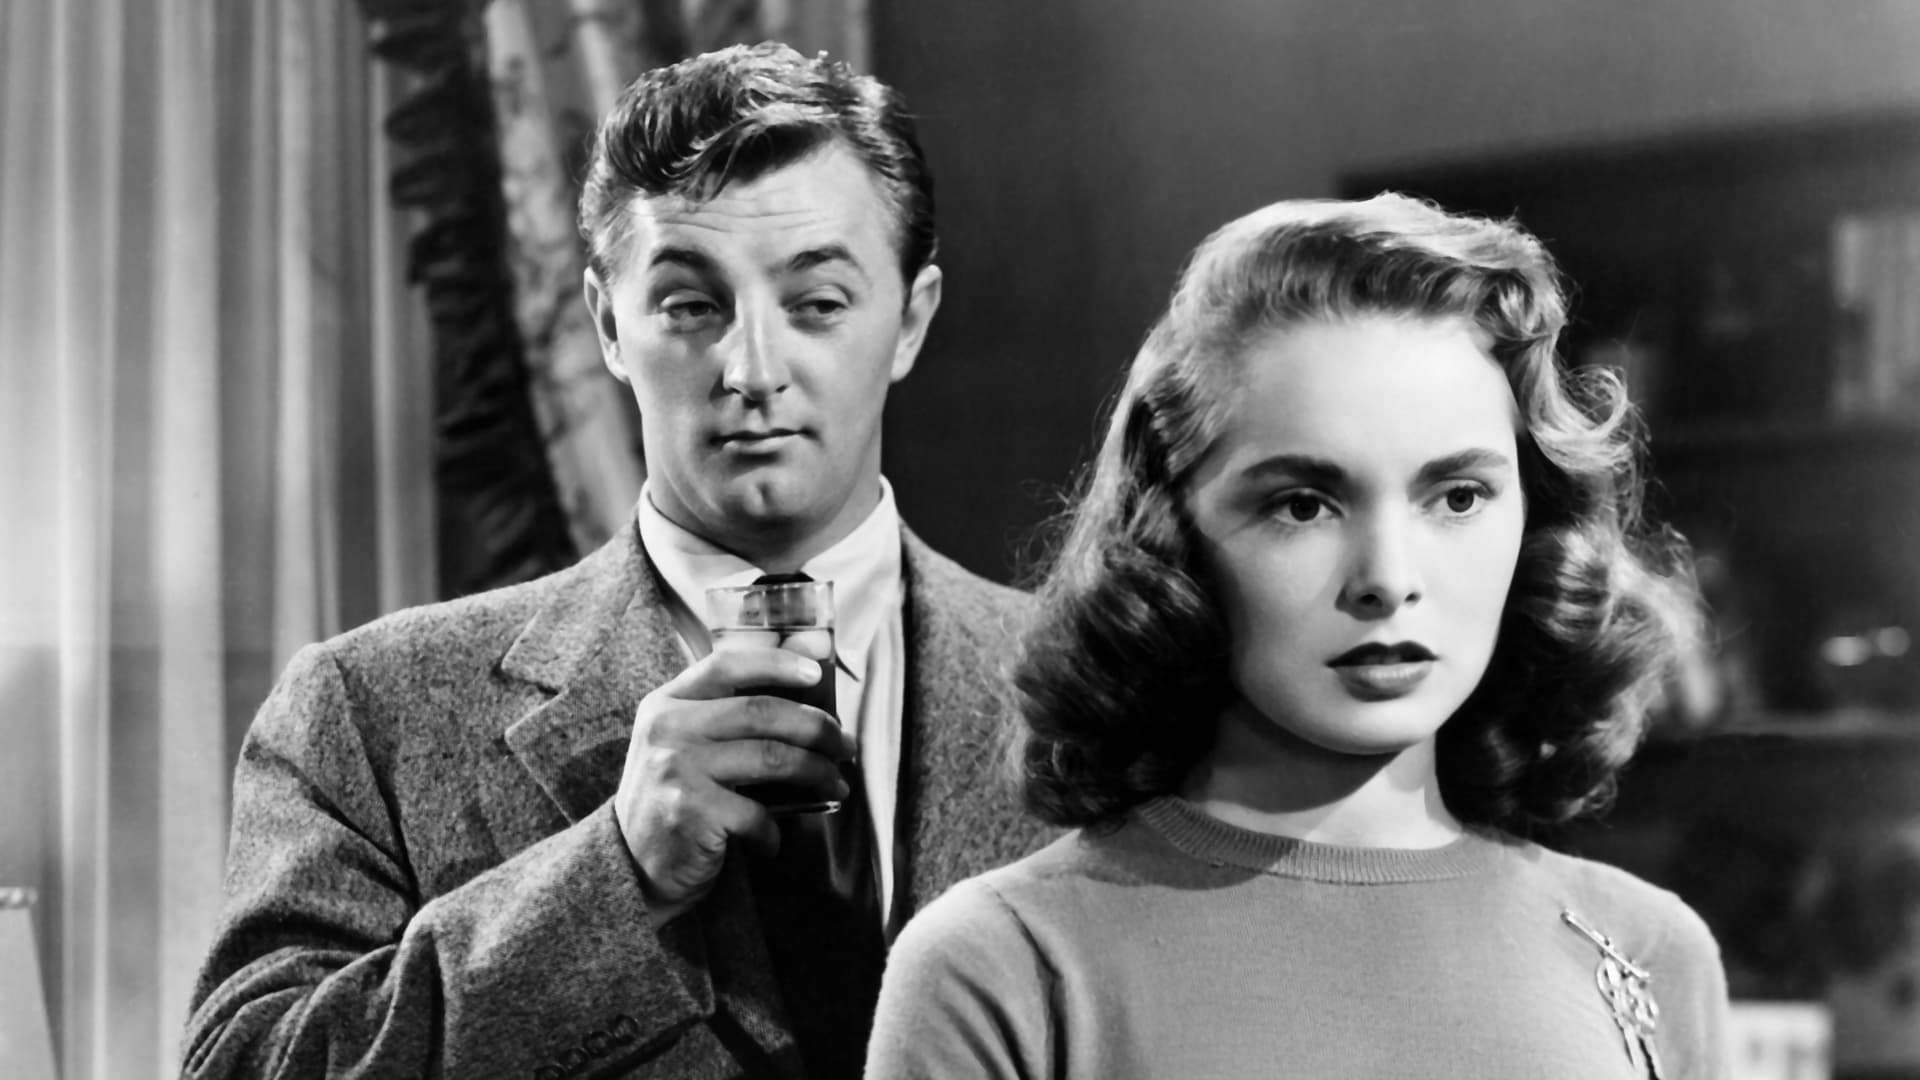 Holiday Affair (1949)